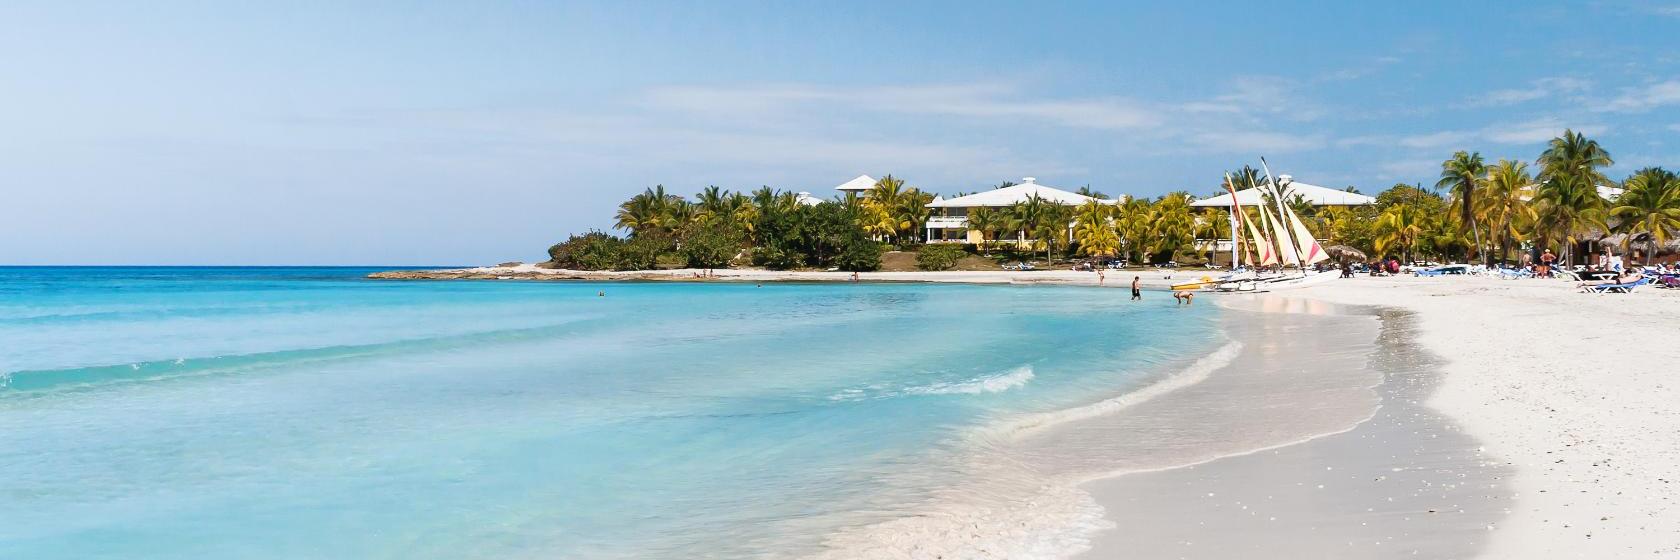 10 Best Varadero Hotels, Cuba (From $31)